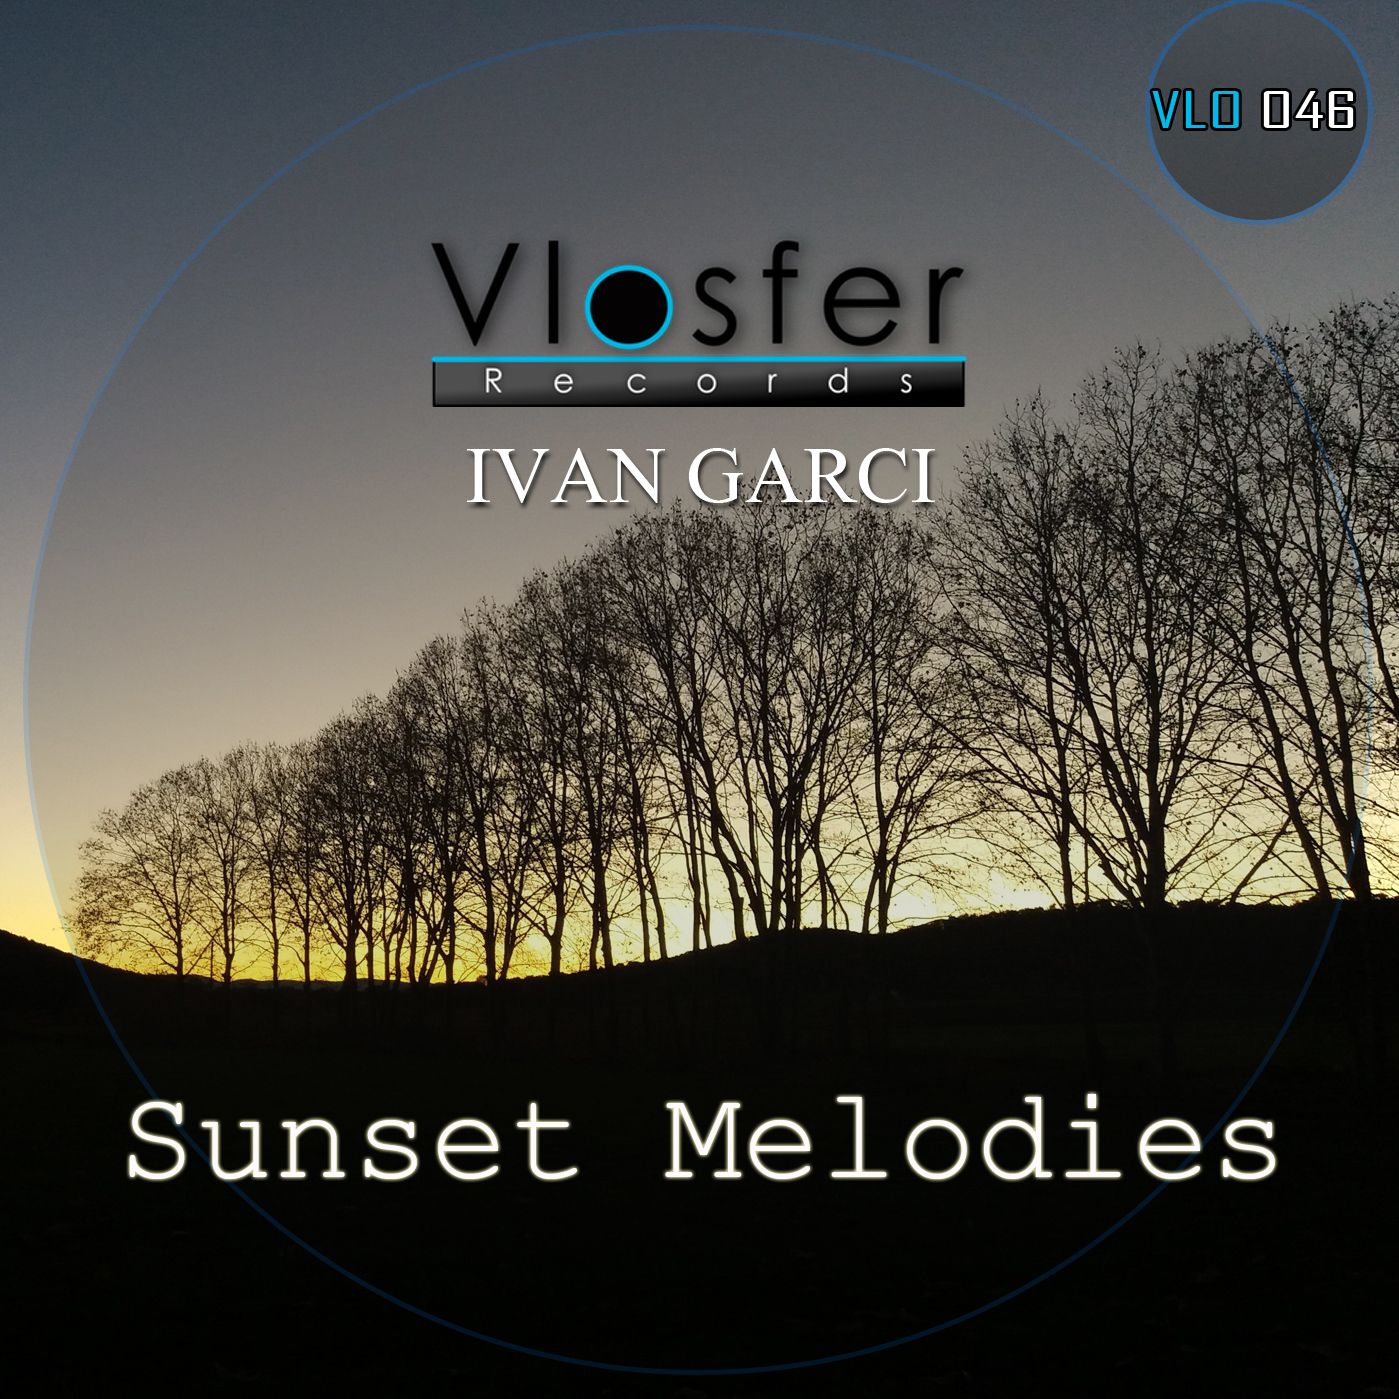 Íoslódáil Clear - Ivan Garci (low quality sound) Vlosfer records.